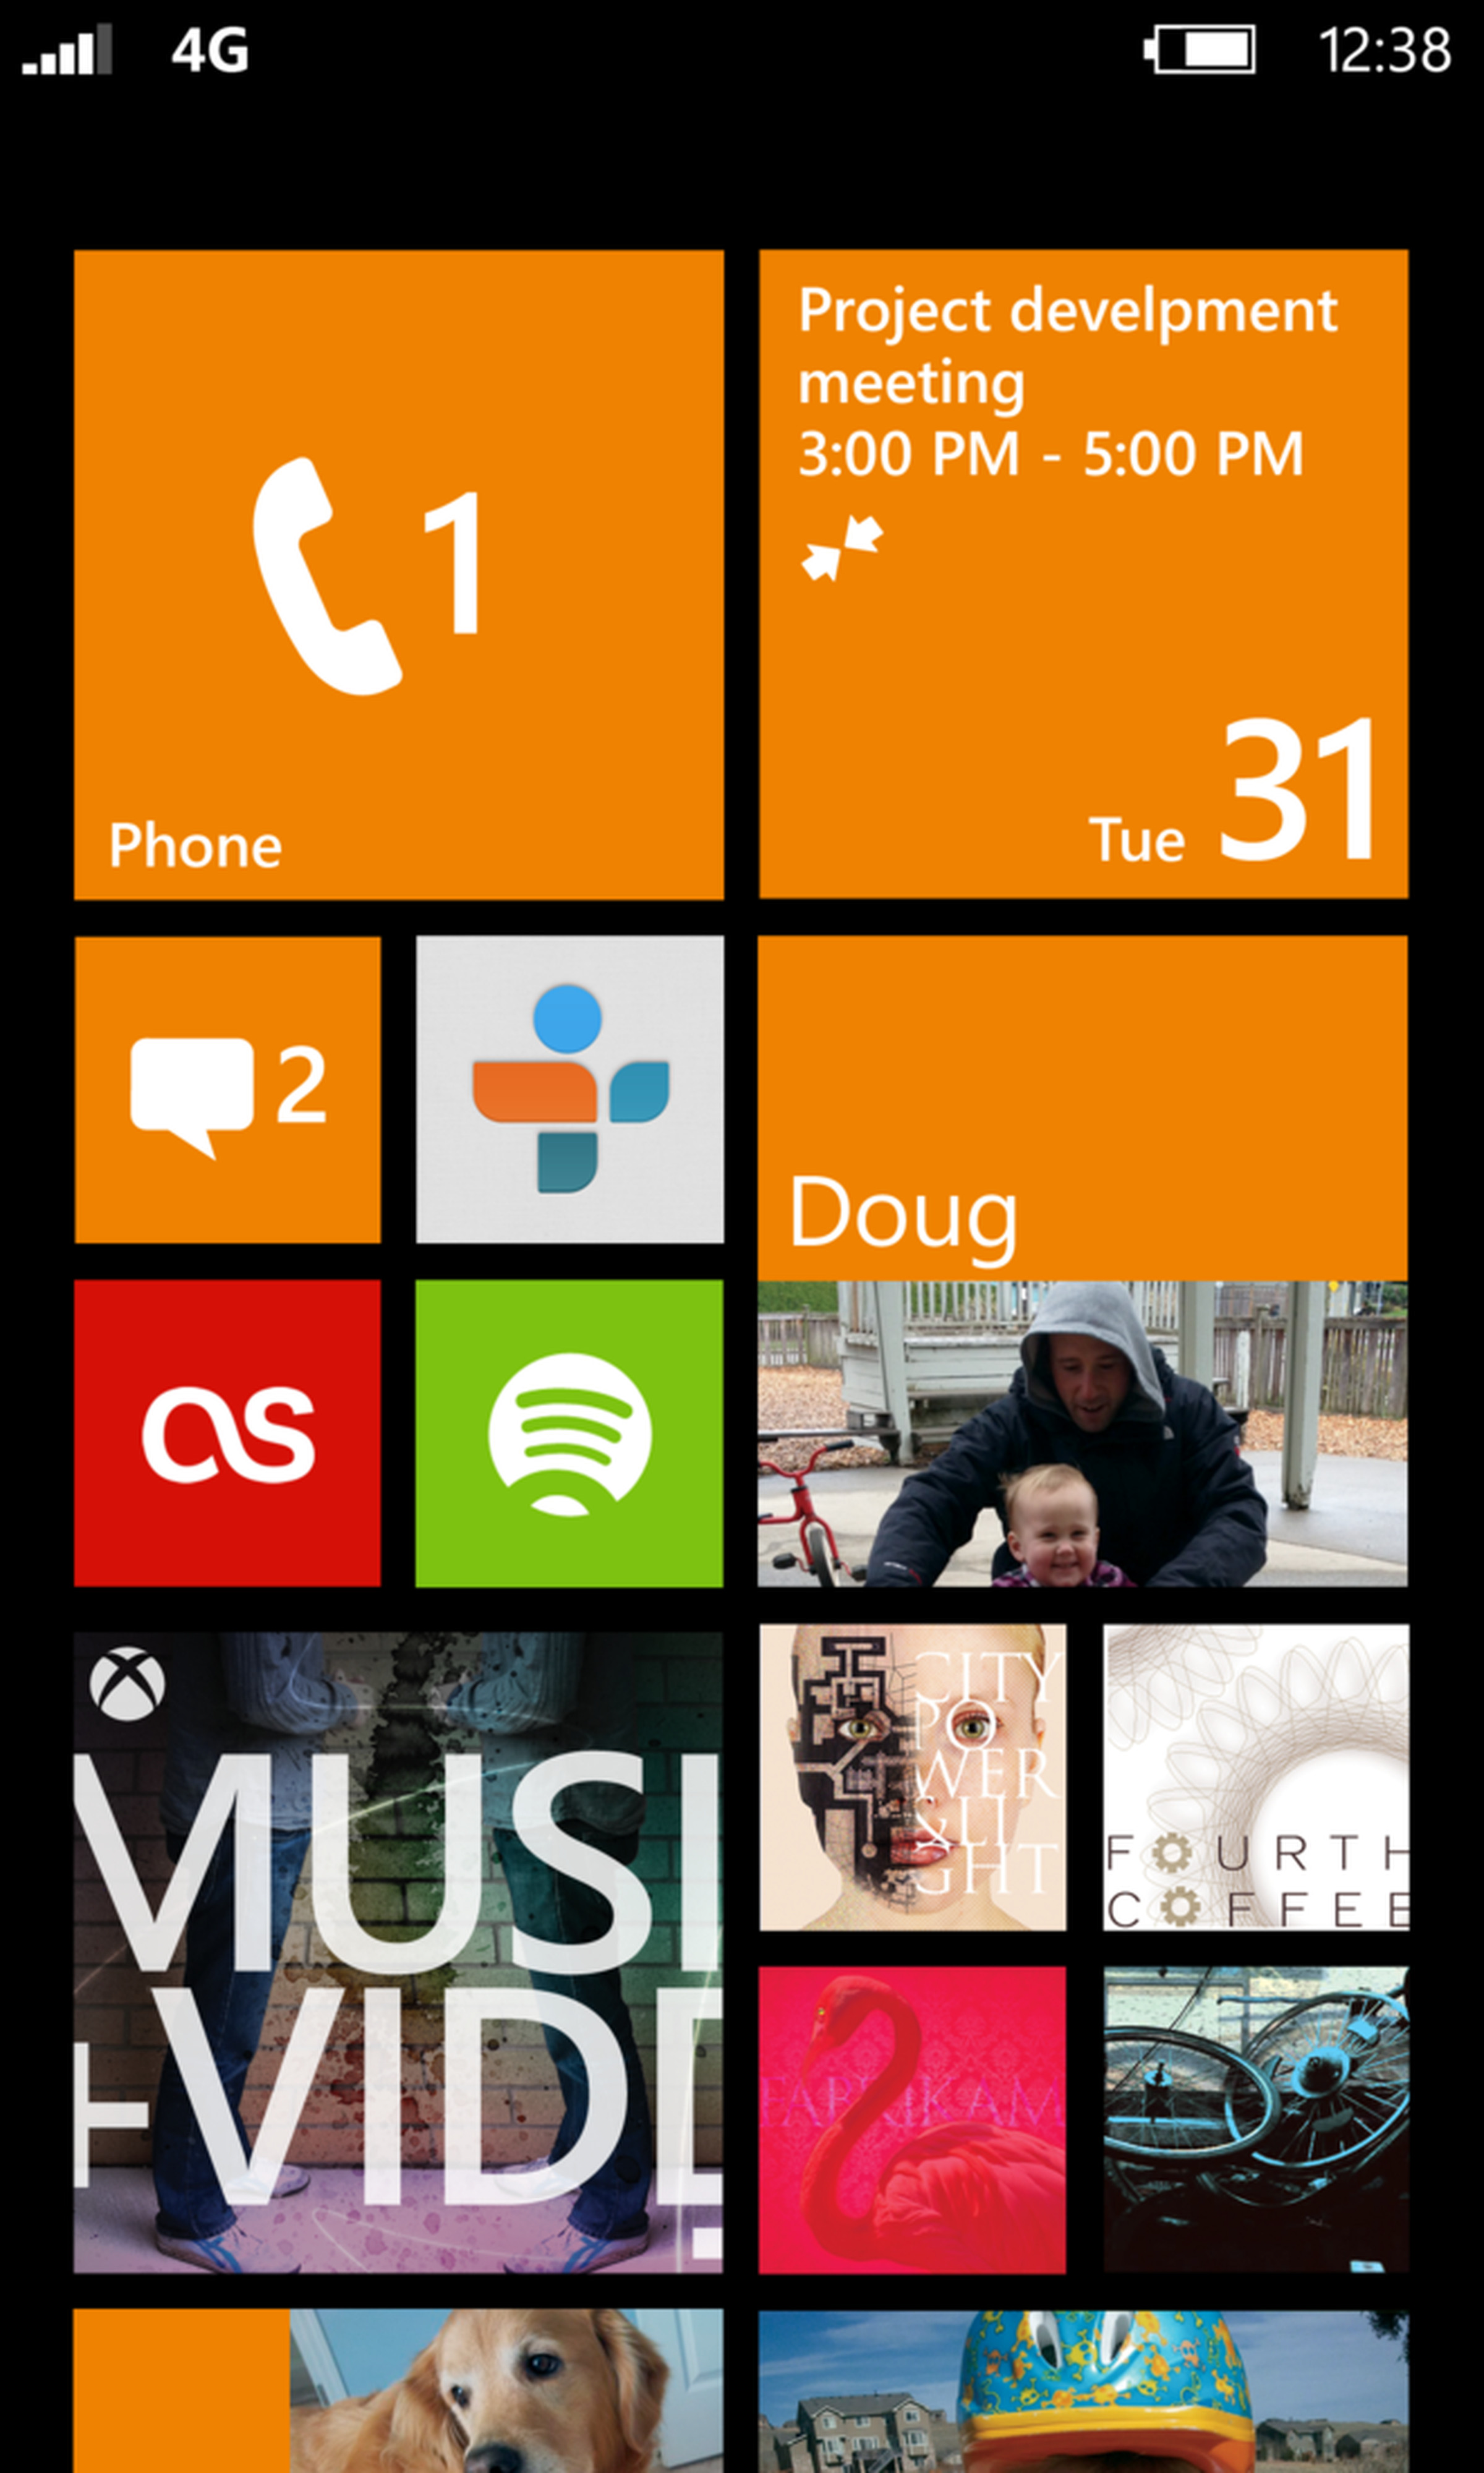 Windows Phone 8 screenshots